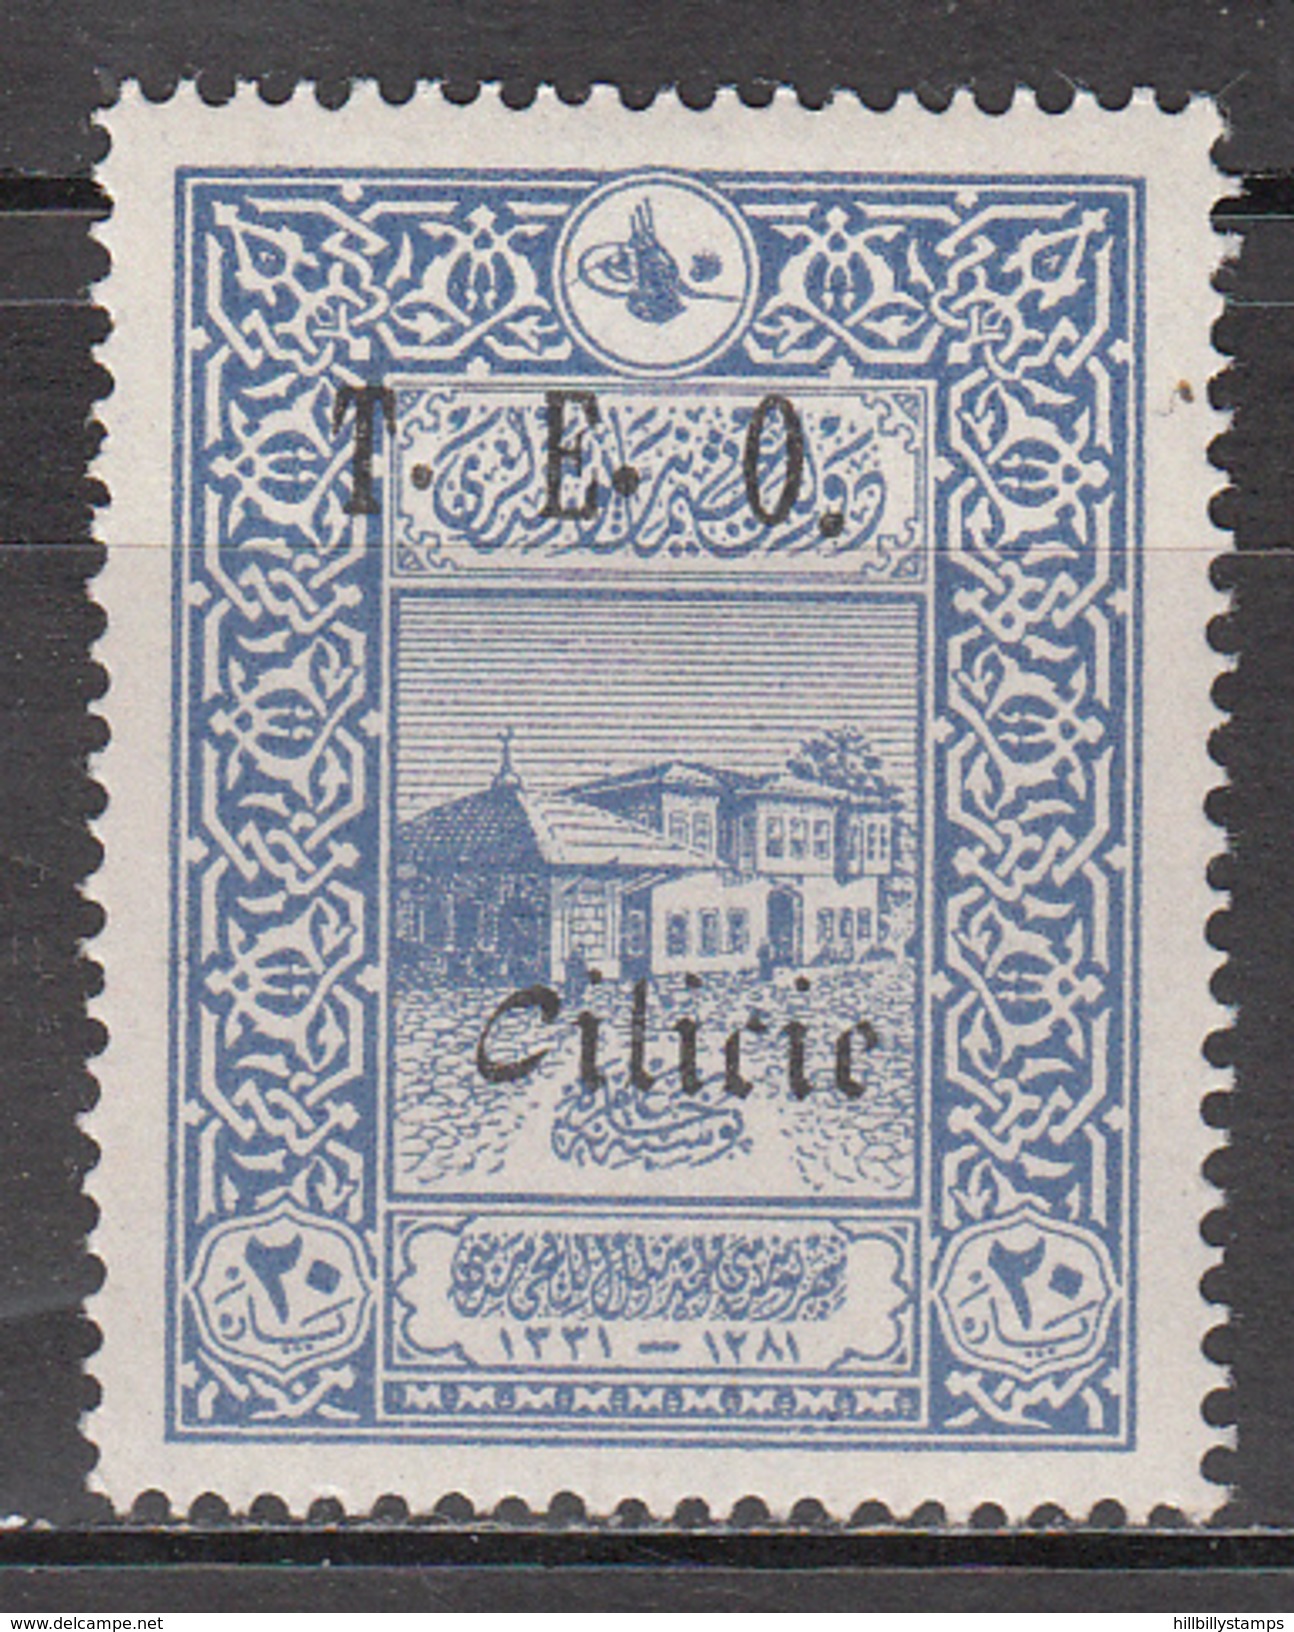 CILICIA     SCOTT NO. 77    MINT HINGED     YEAR  1919 - Neufs